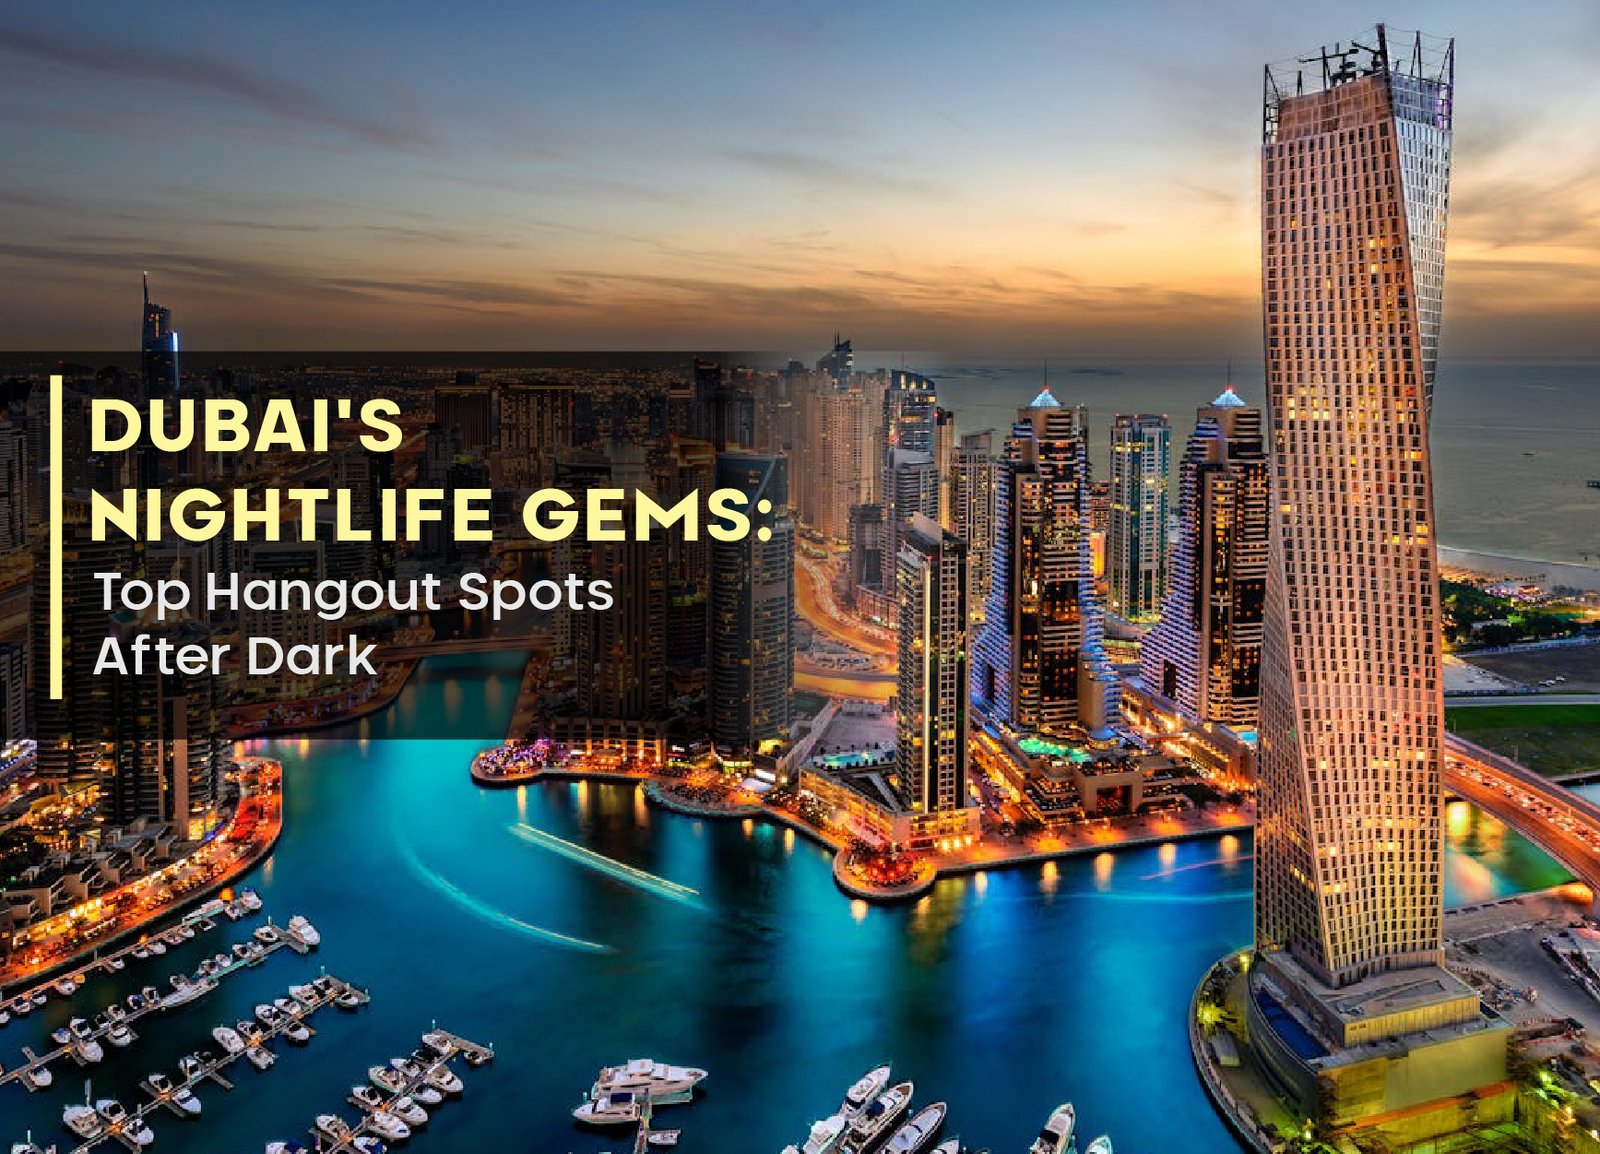 Dubai’s Nightlife Gems: Top Hangout Spots After Dark